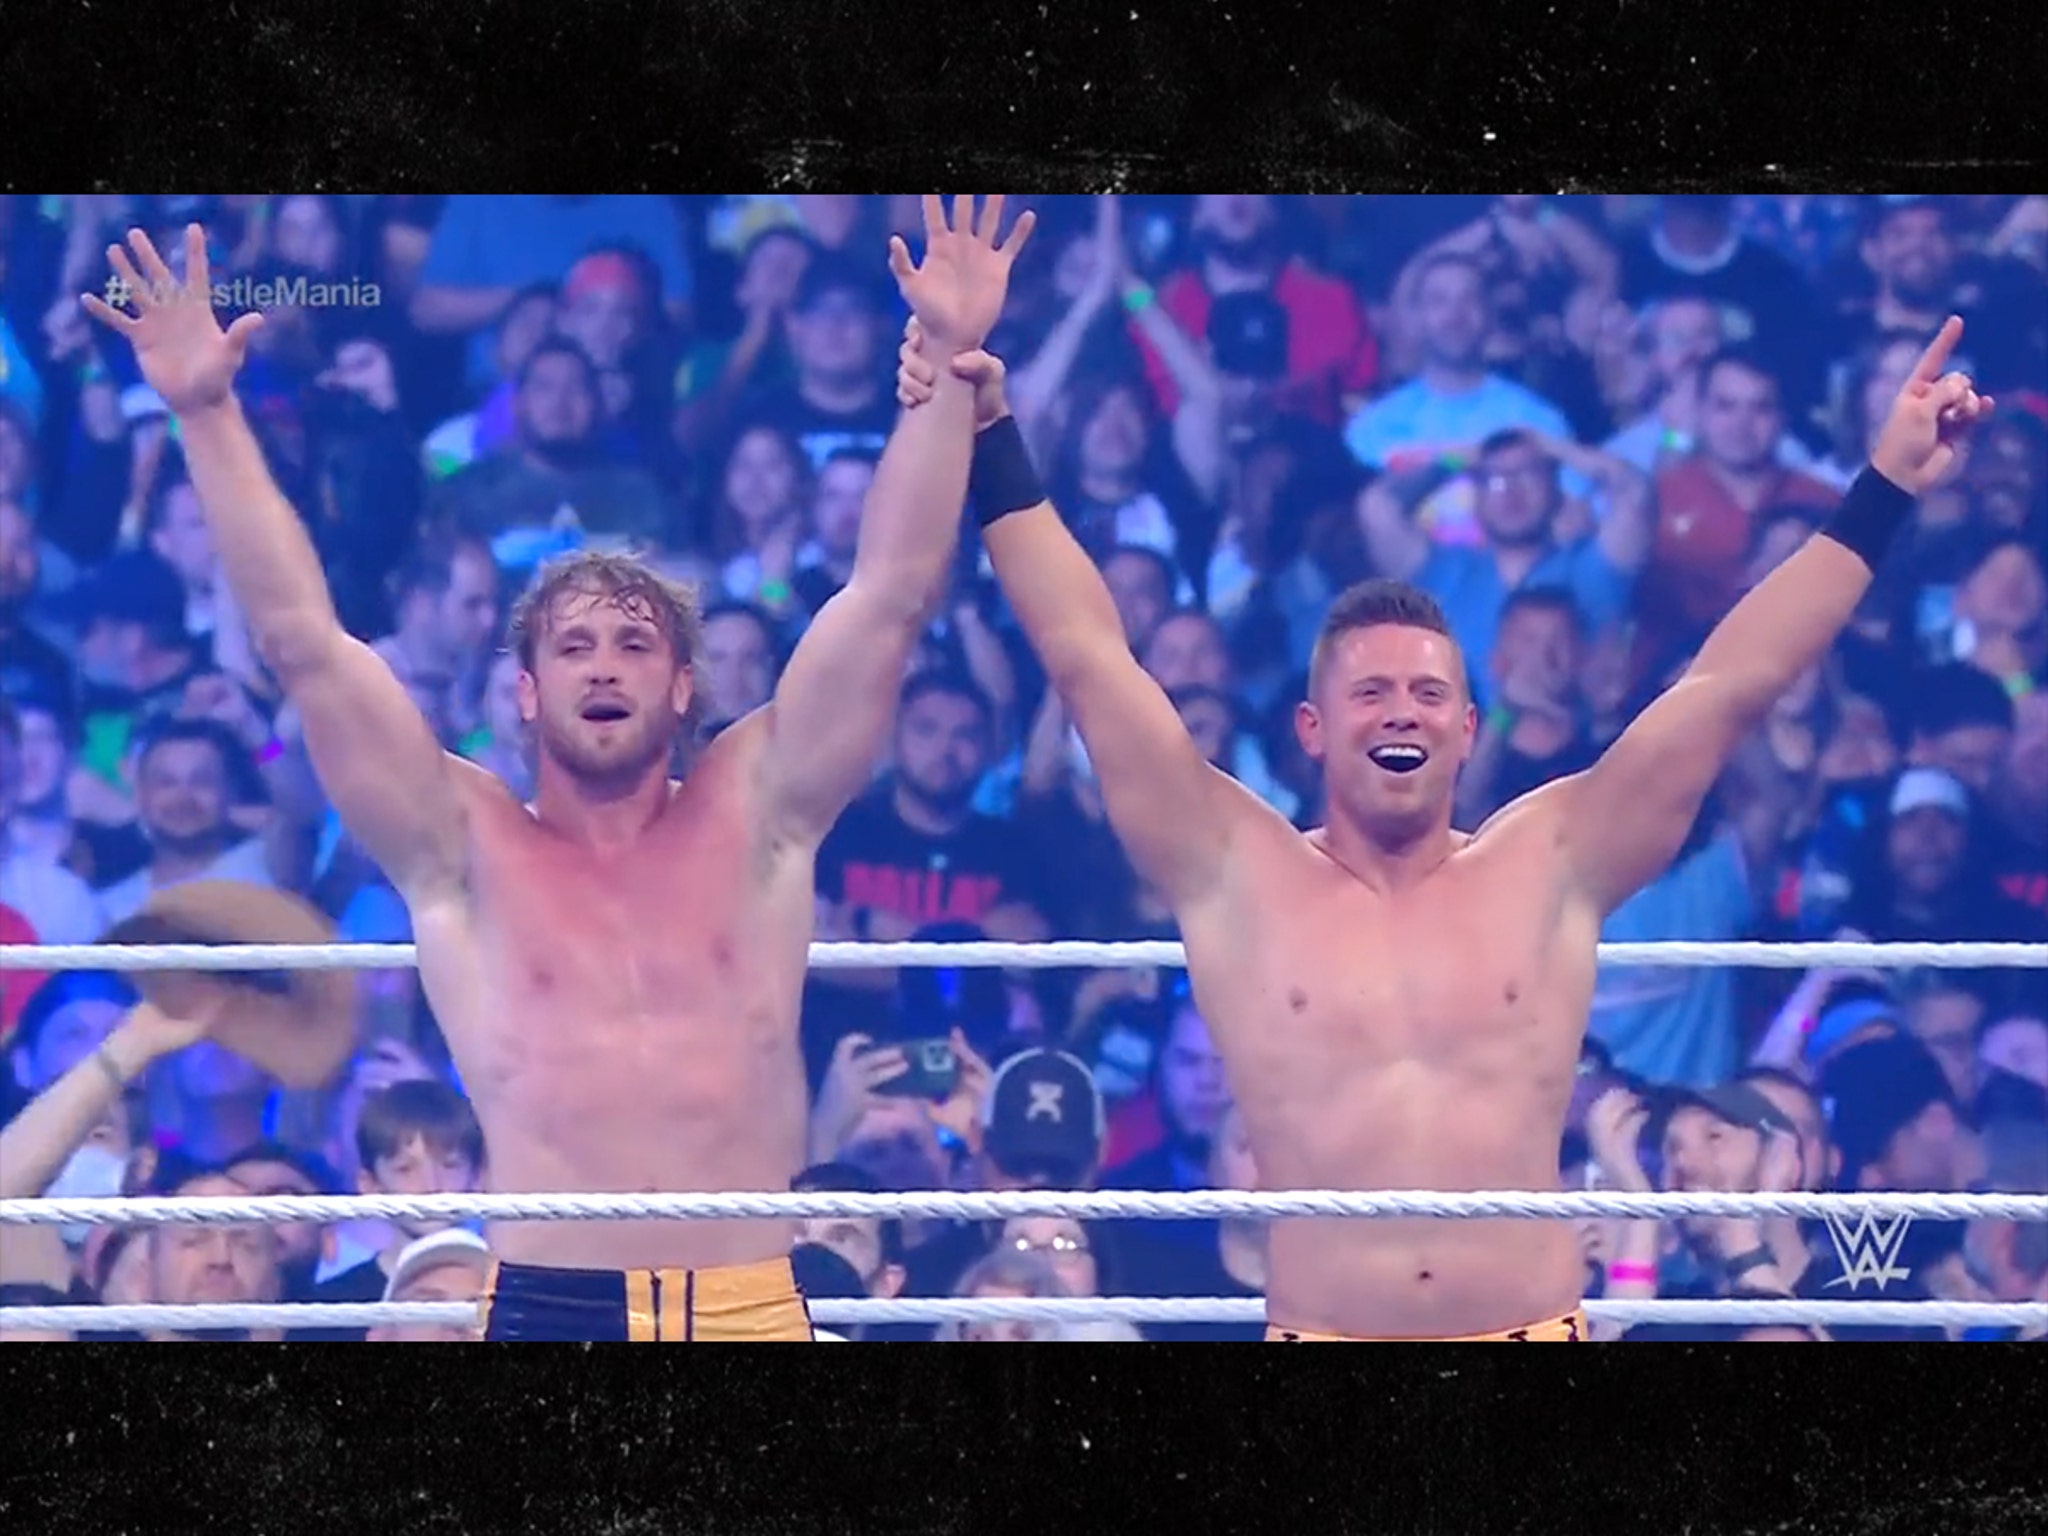 Logan Paul Crushes WrestleMania, Wins Tag Team Match With The Miz